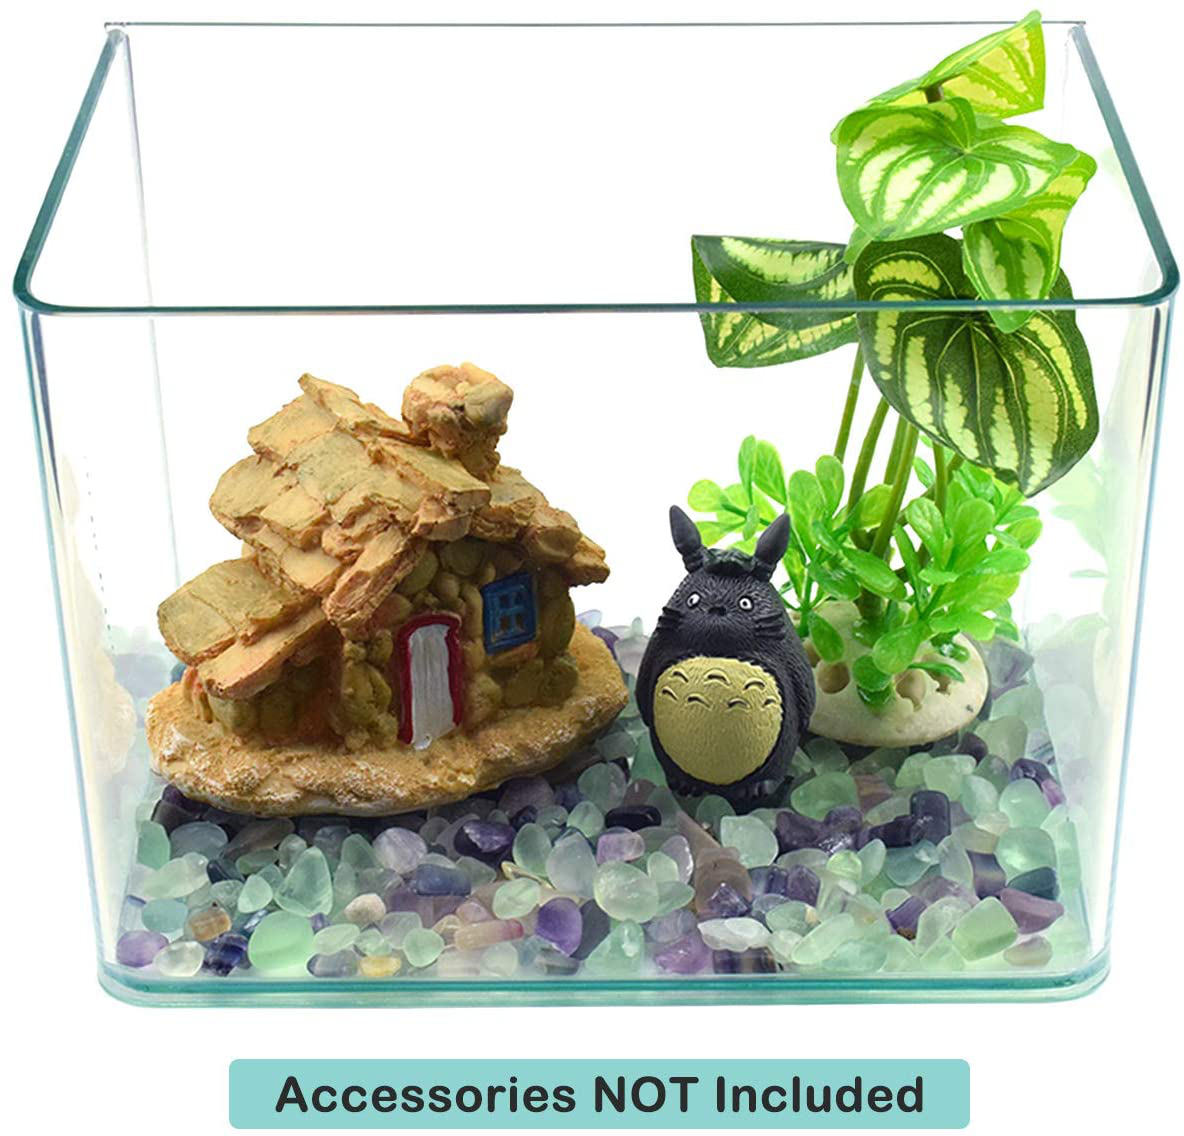 WAYBER Decorative Crystal Pebbles, 1 Lb/460G (Fill 0.9 Cup) Natural Quartz Stones Aquarium Gravel Sea Glass Rock Sand for Fish Turtle Tank/Air Plants Decoration